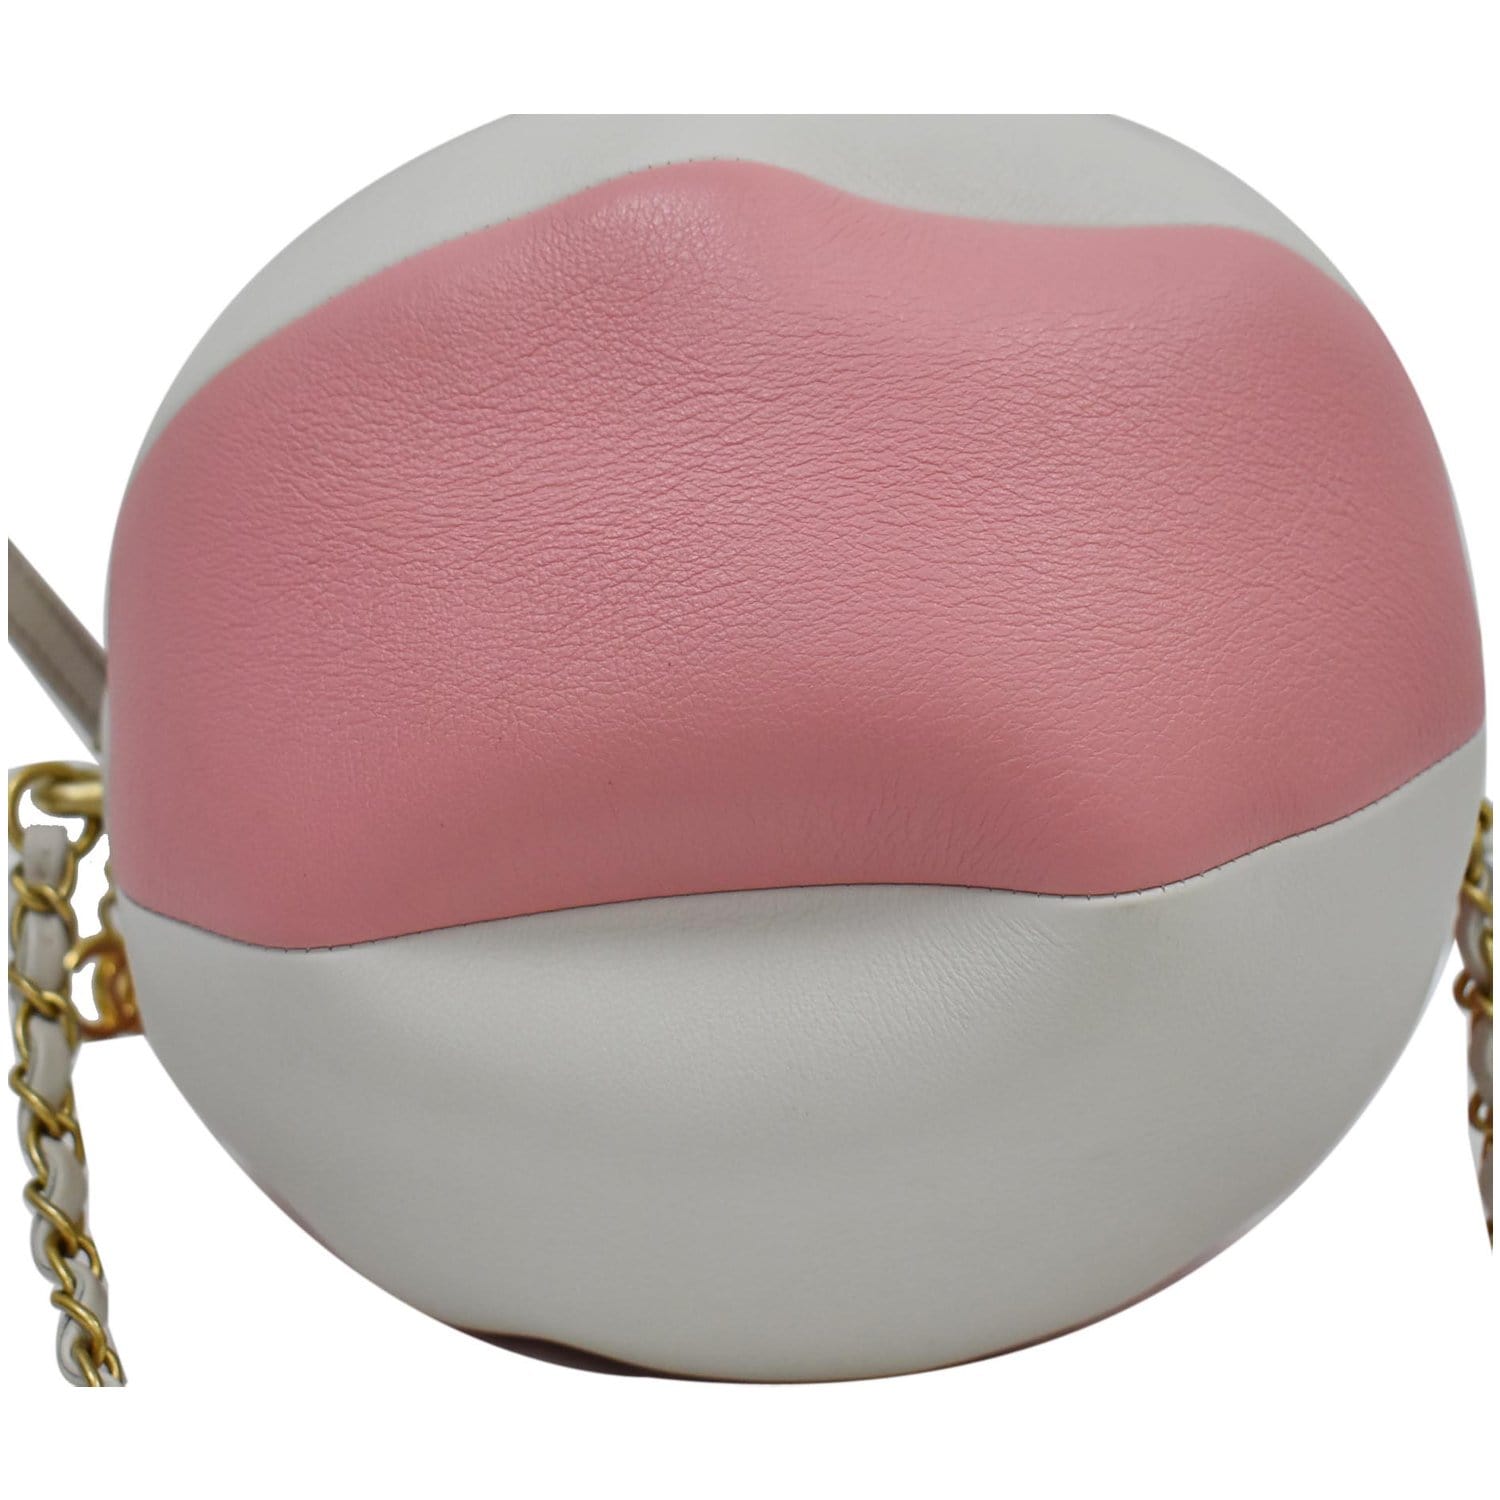 CHANEL 1685-Beach Ball Small Calfskin Leather Shoulder Bag Pink - 10%